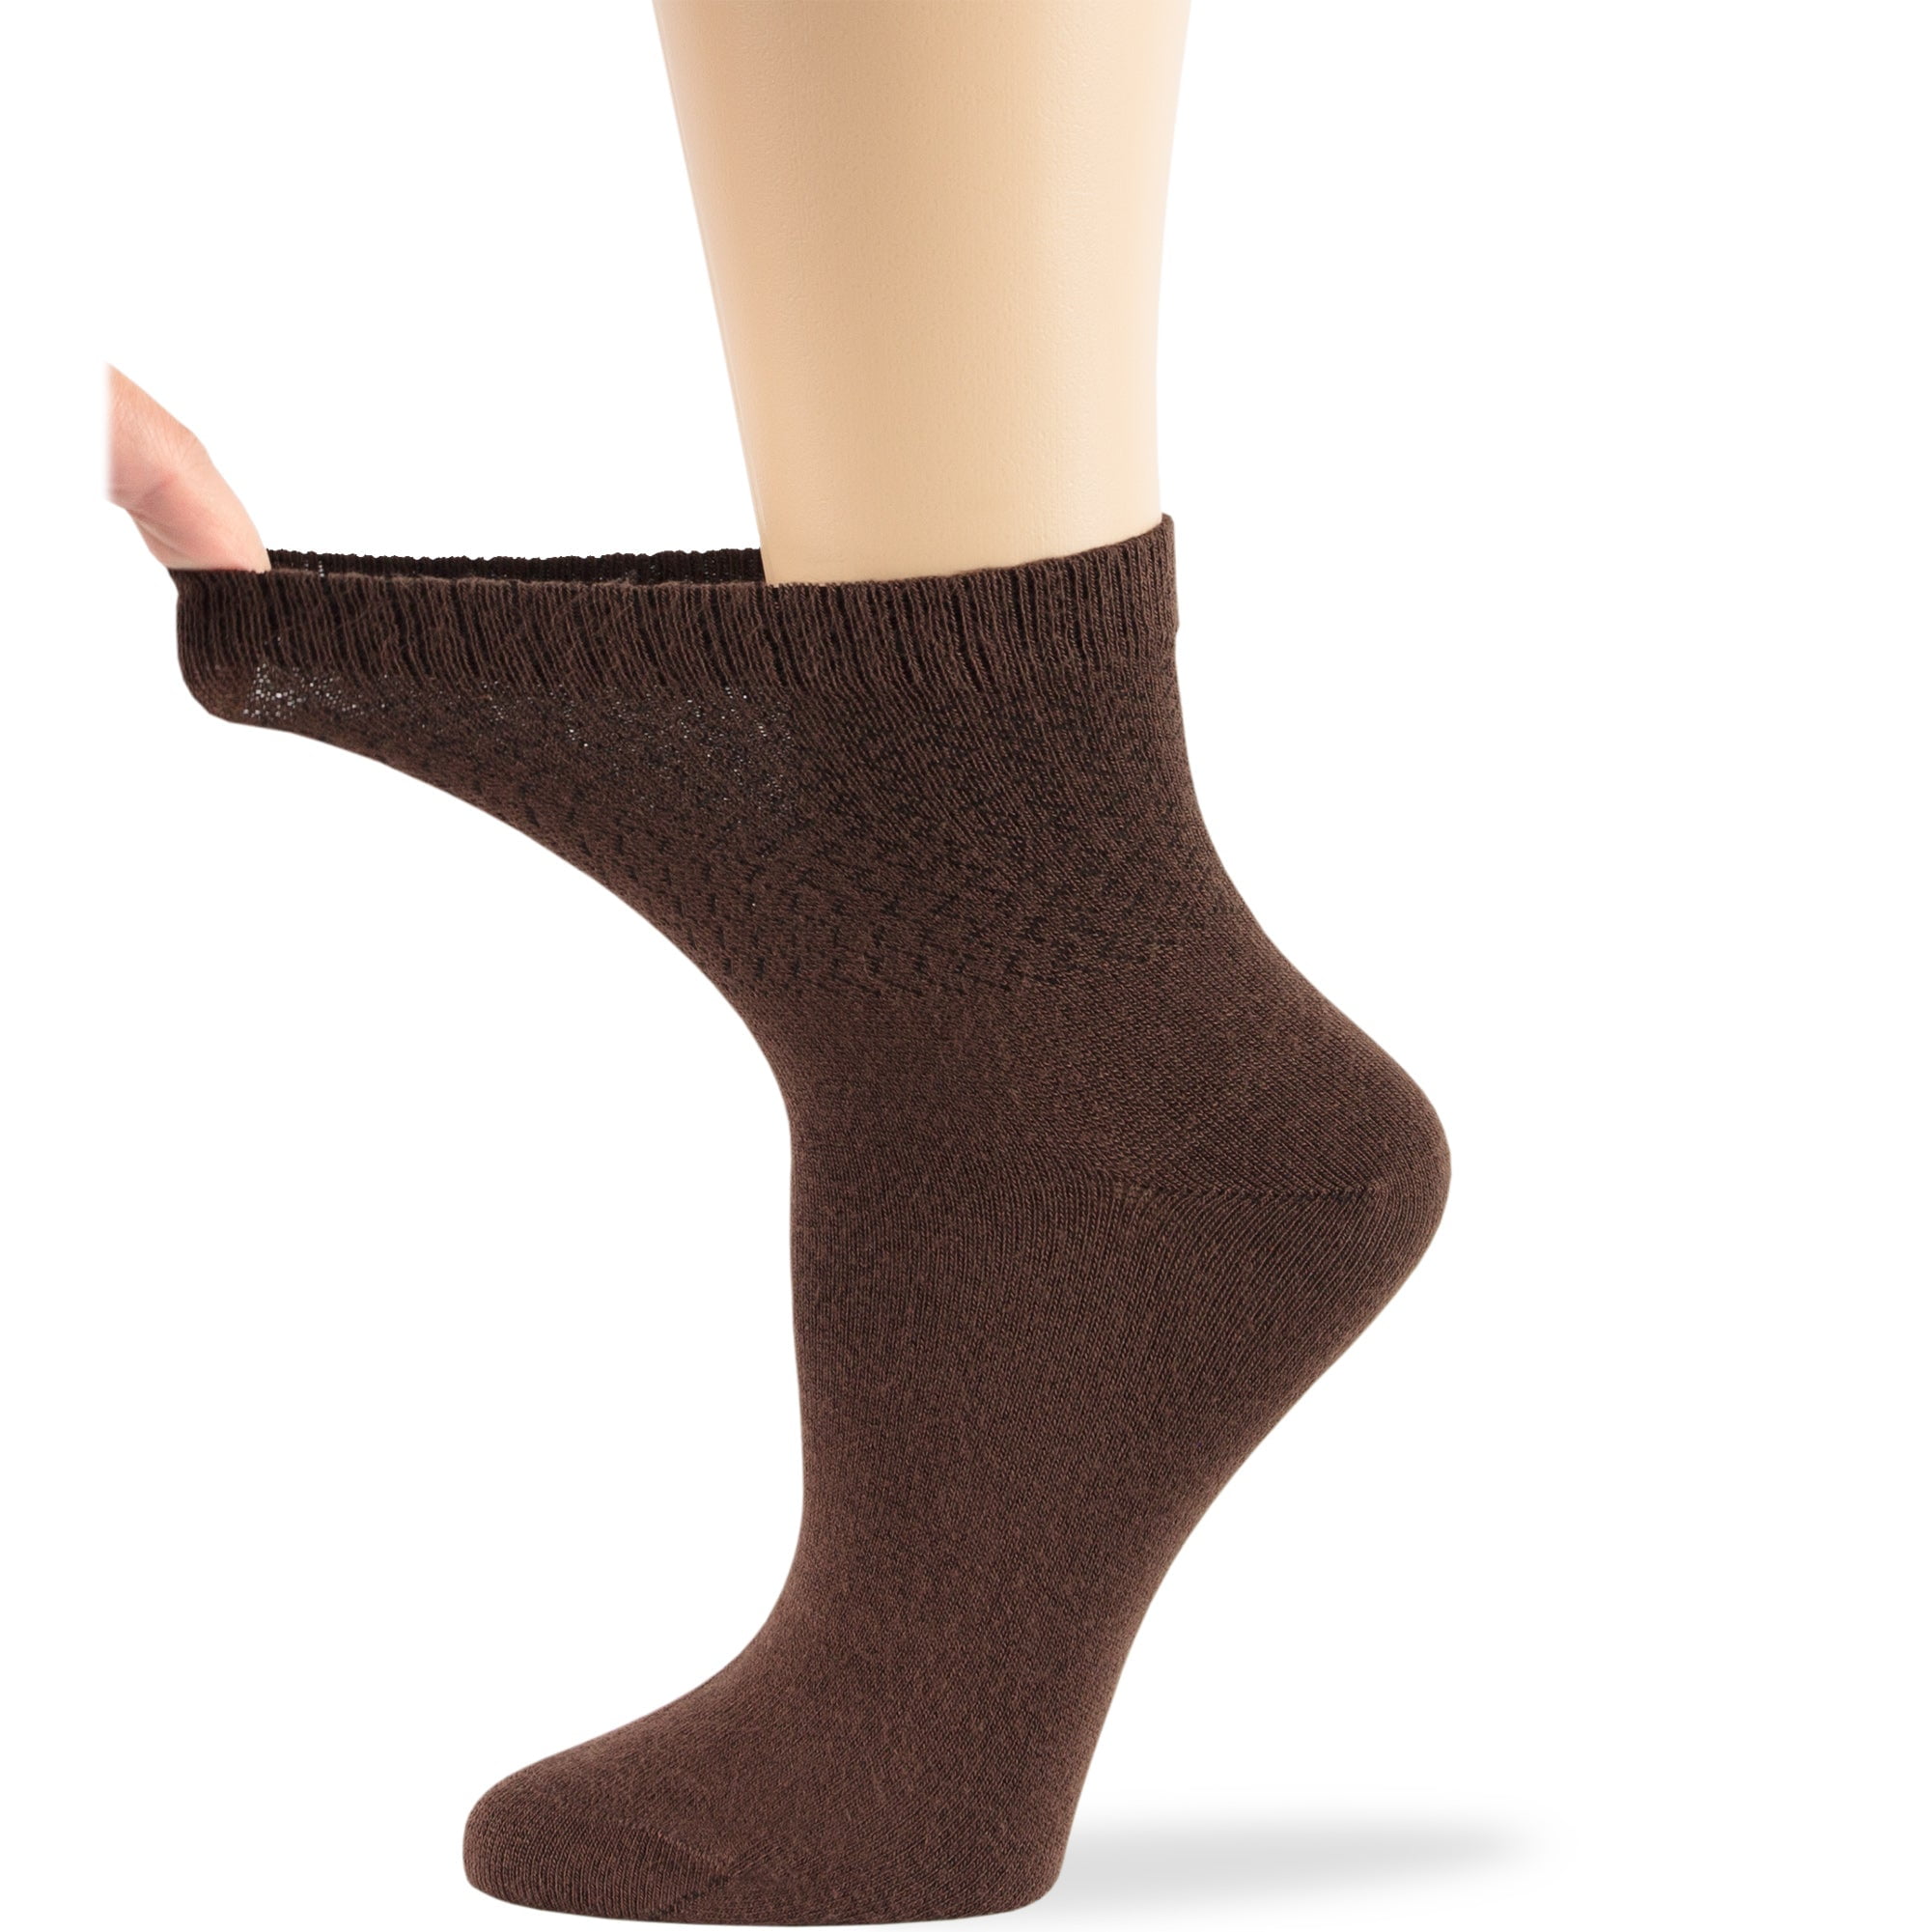 3,6&12 Ladies Designer Non Elastic Diabetic Friendly Quality Sock UK4-7  EU35-39